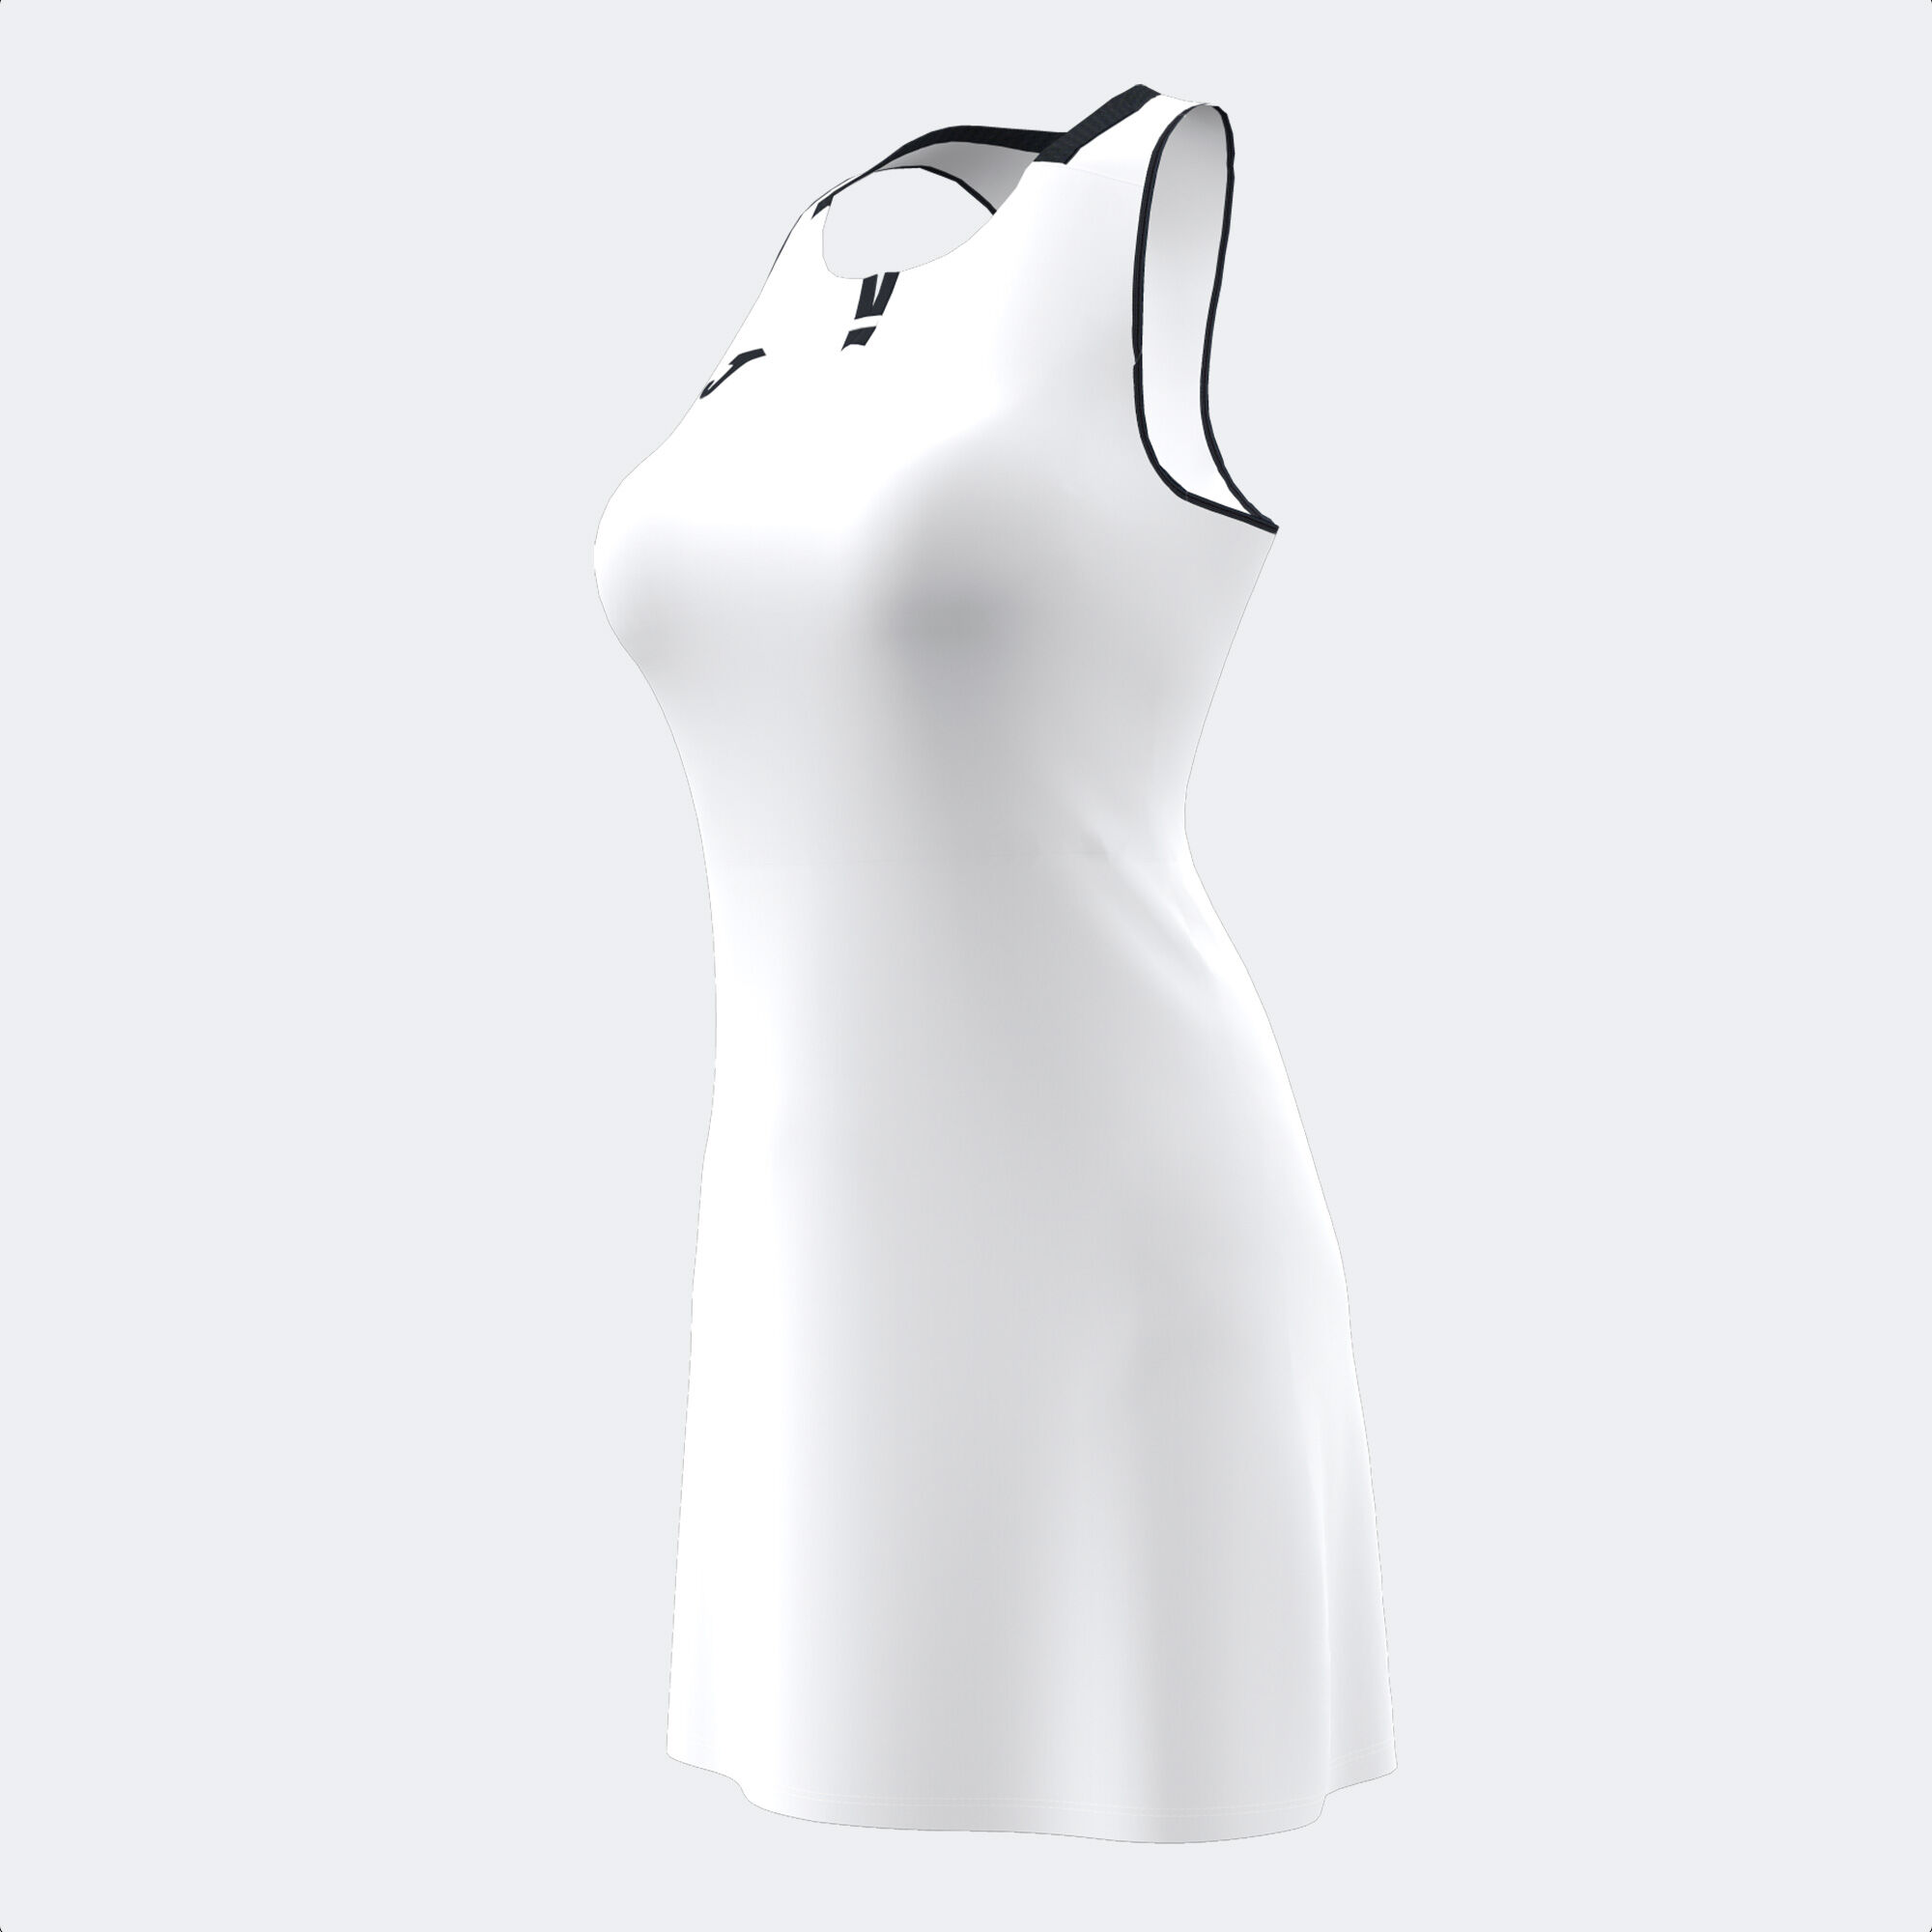 Kleid frau Ranking weiß schwarz